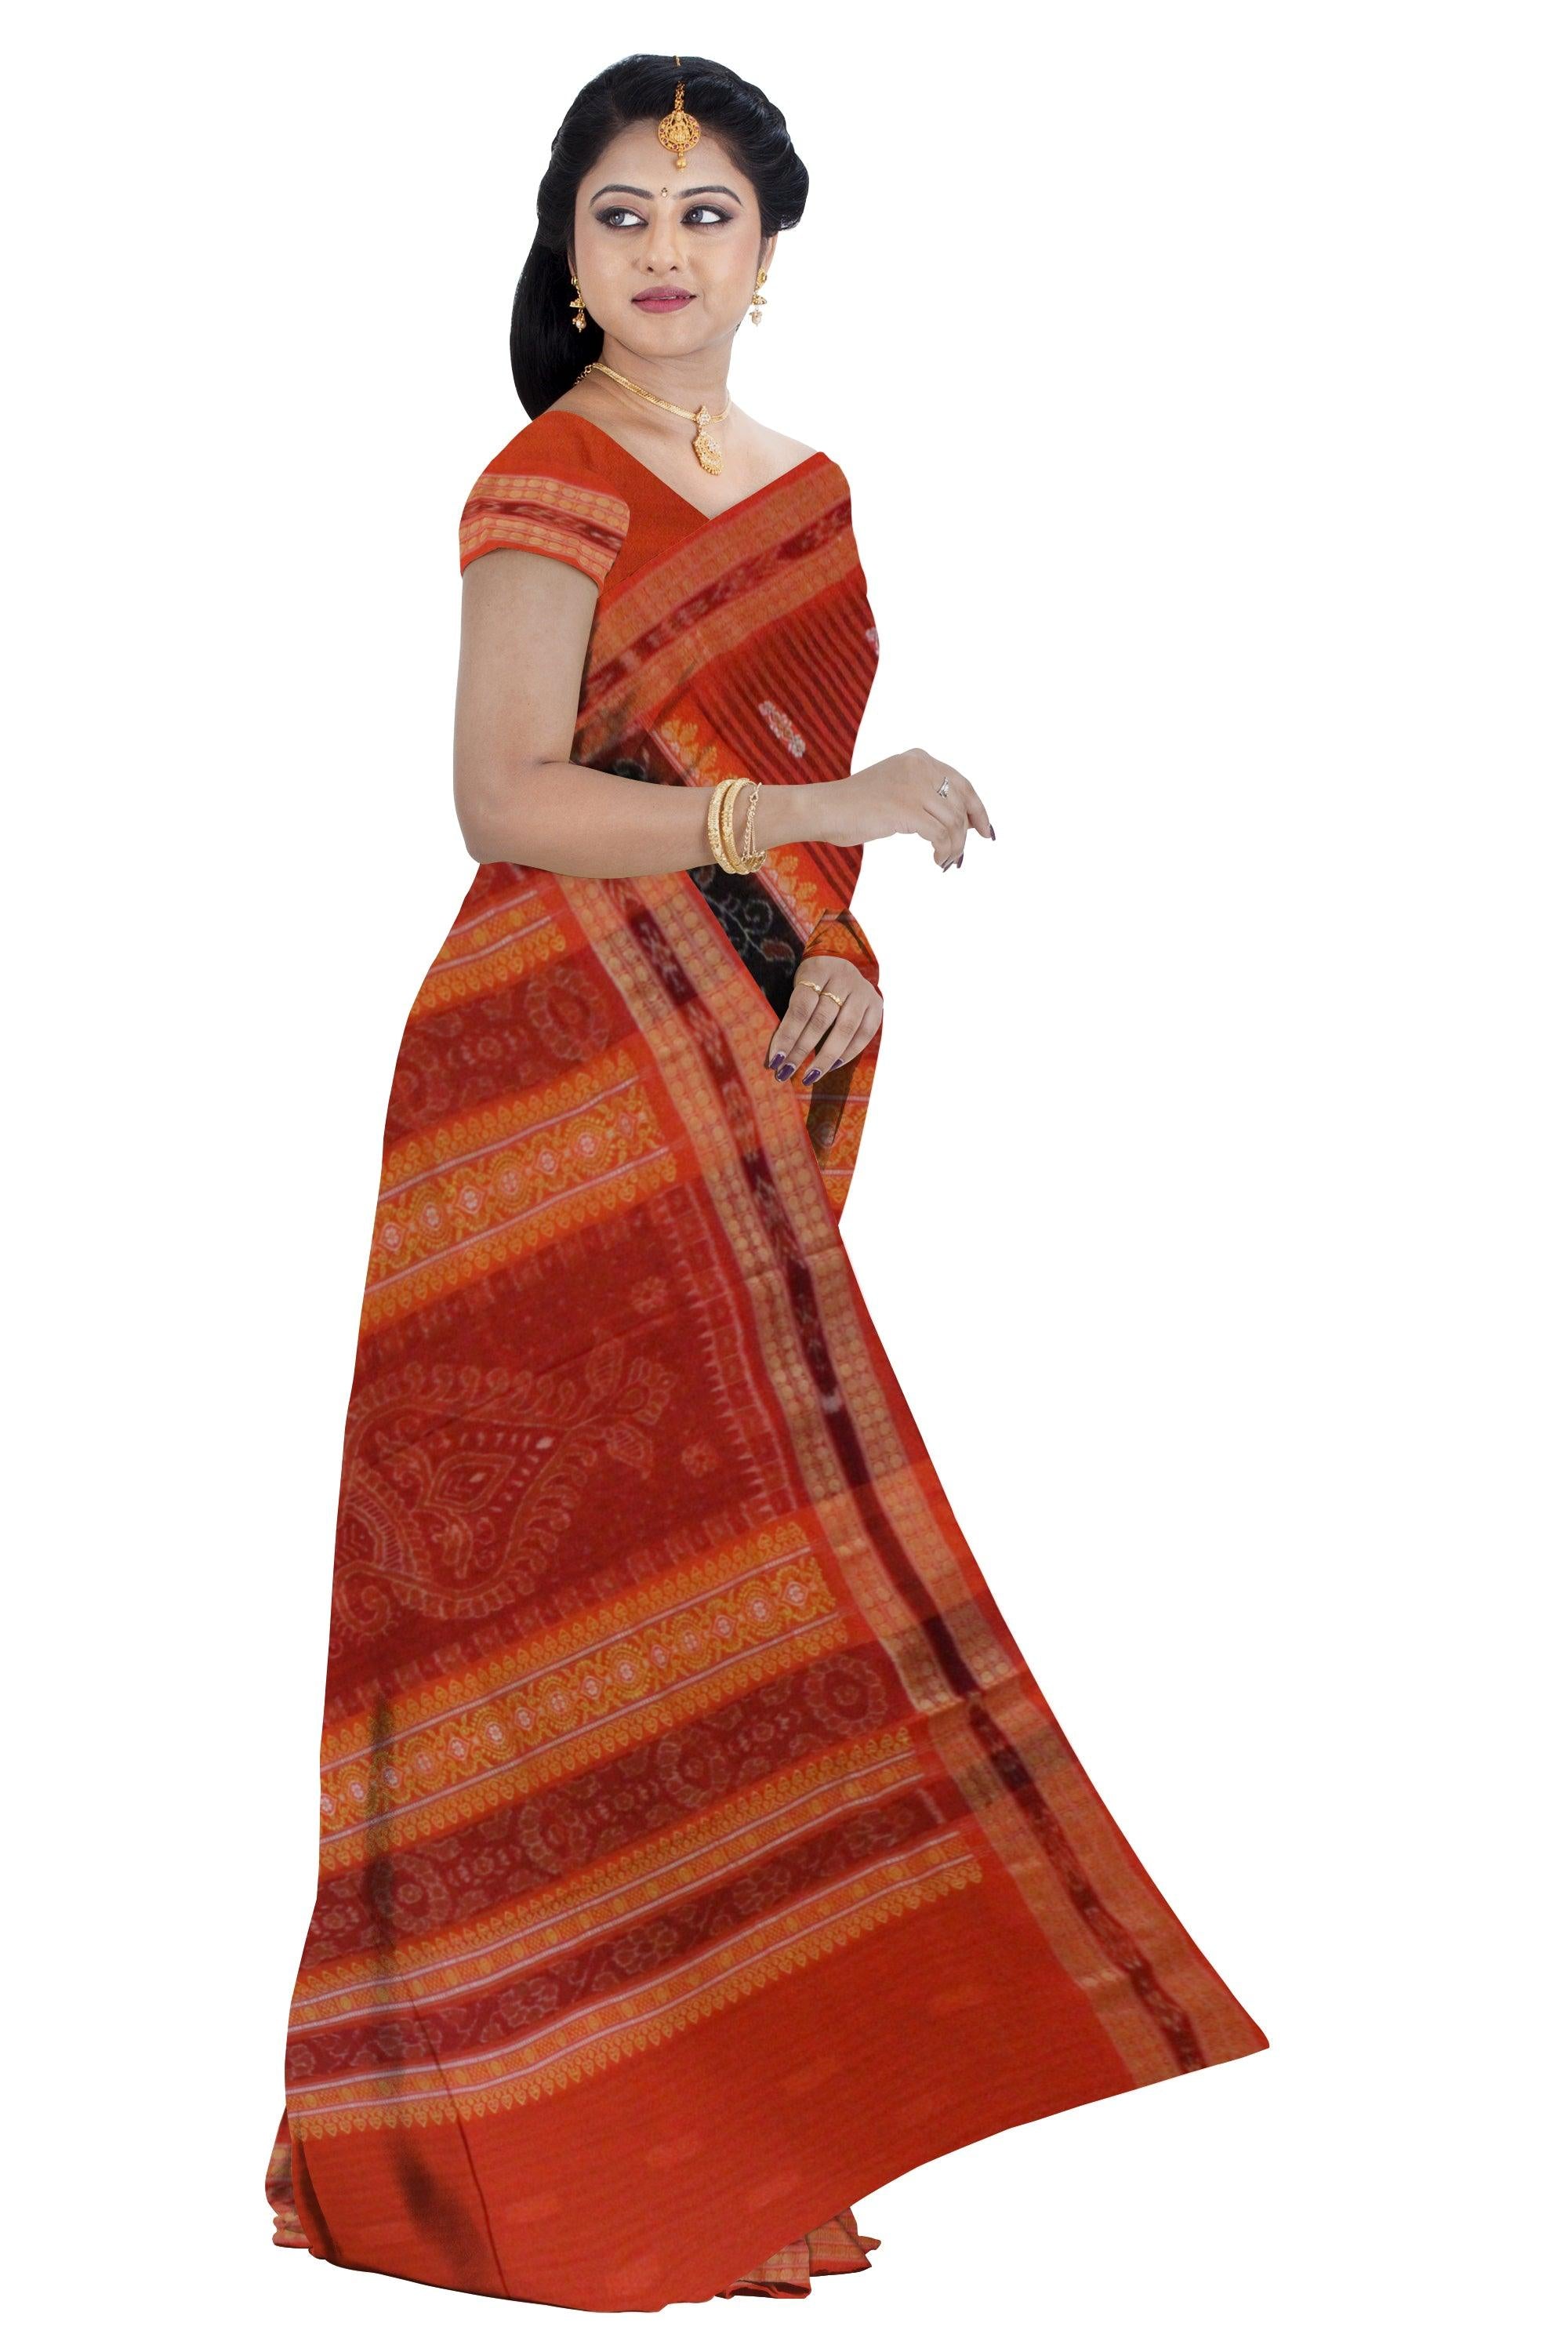 Sambalpuri Cotton Saree in  Mayurika and Booty design in body in Black and Orange Colour - Koshali Arts & Crafts Enterprise